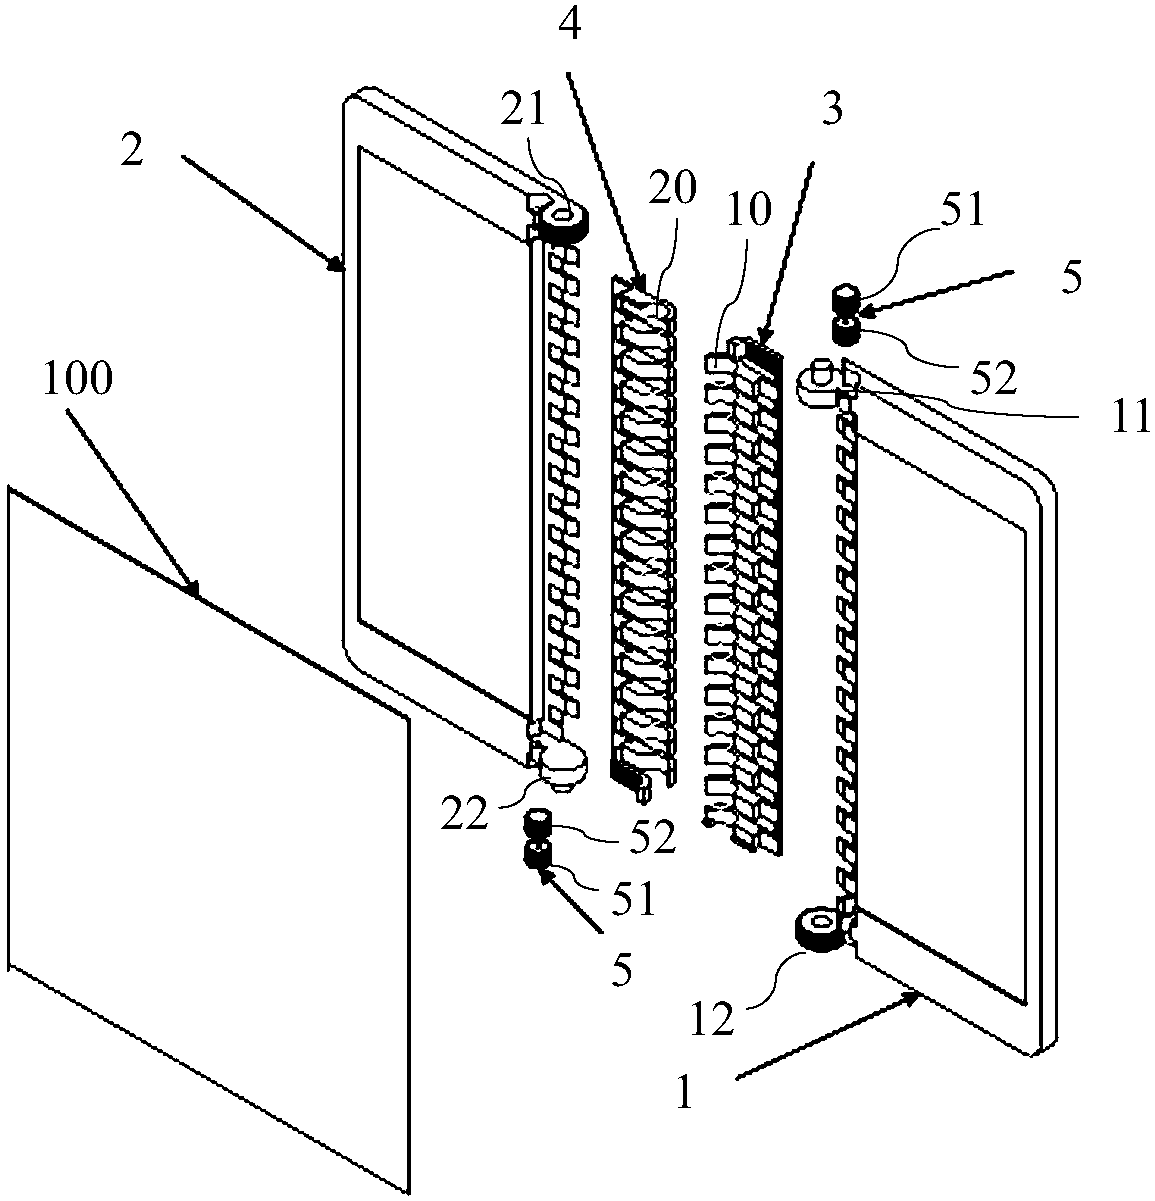 Folding mechanism used for flexible screen